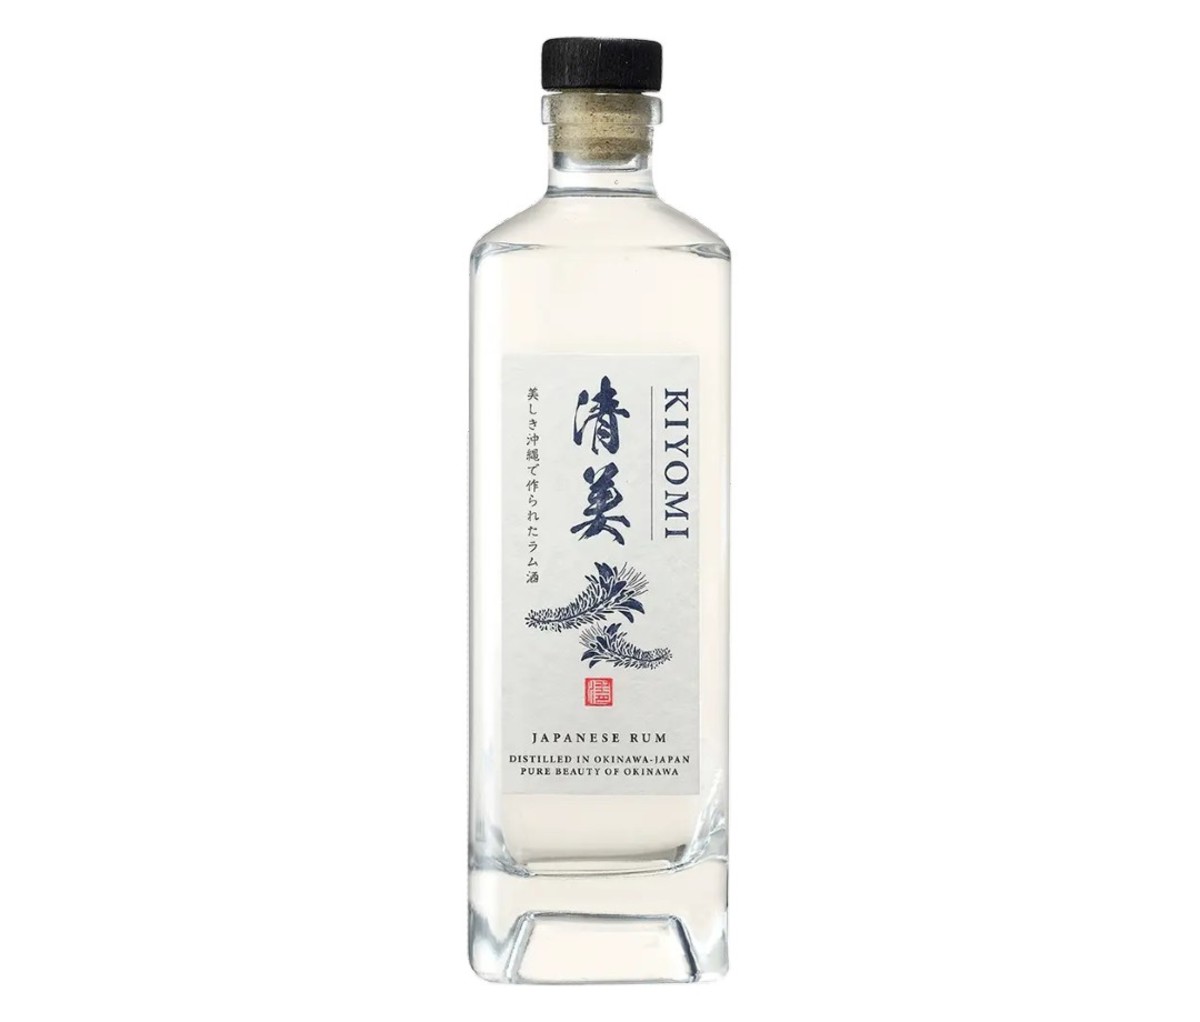 A bottle of Kiyomi Japanese Rum